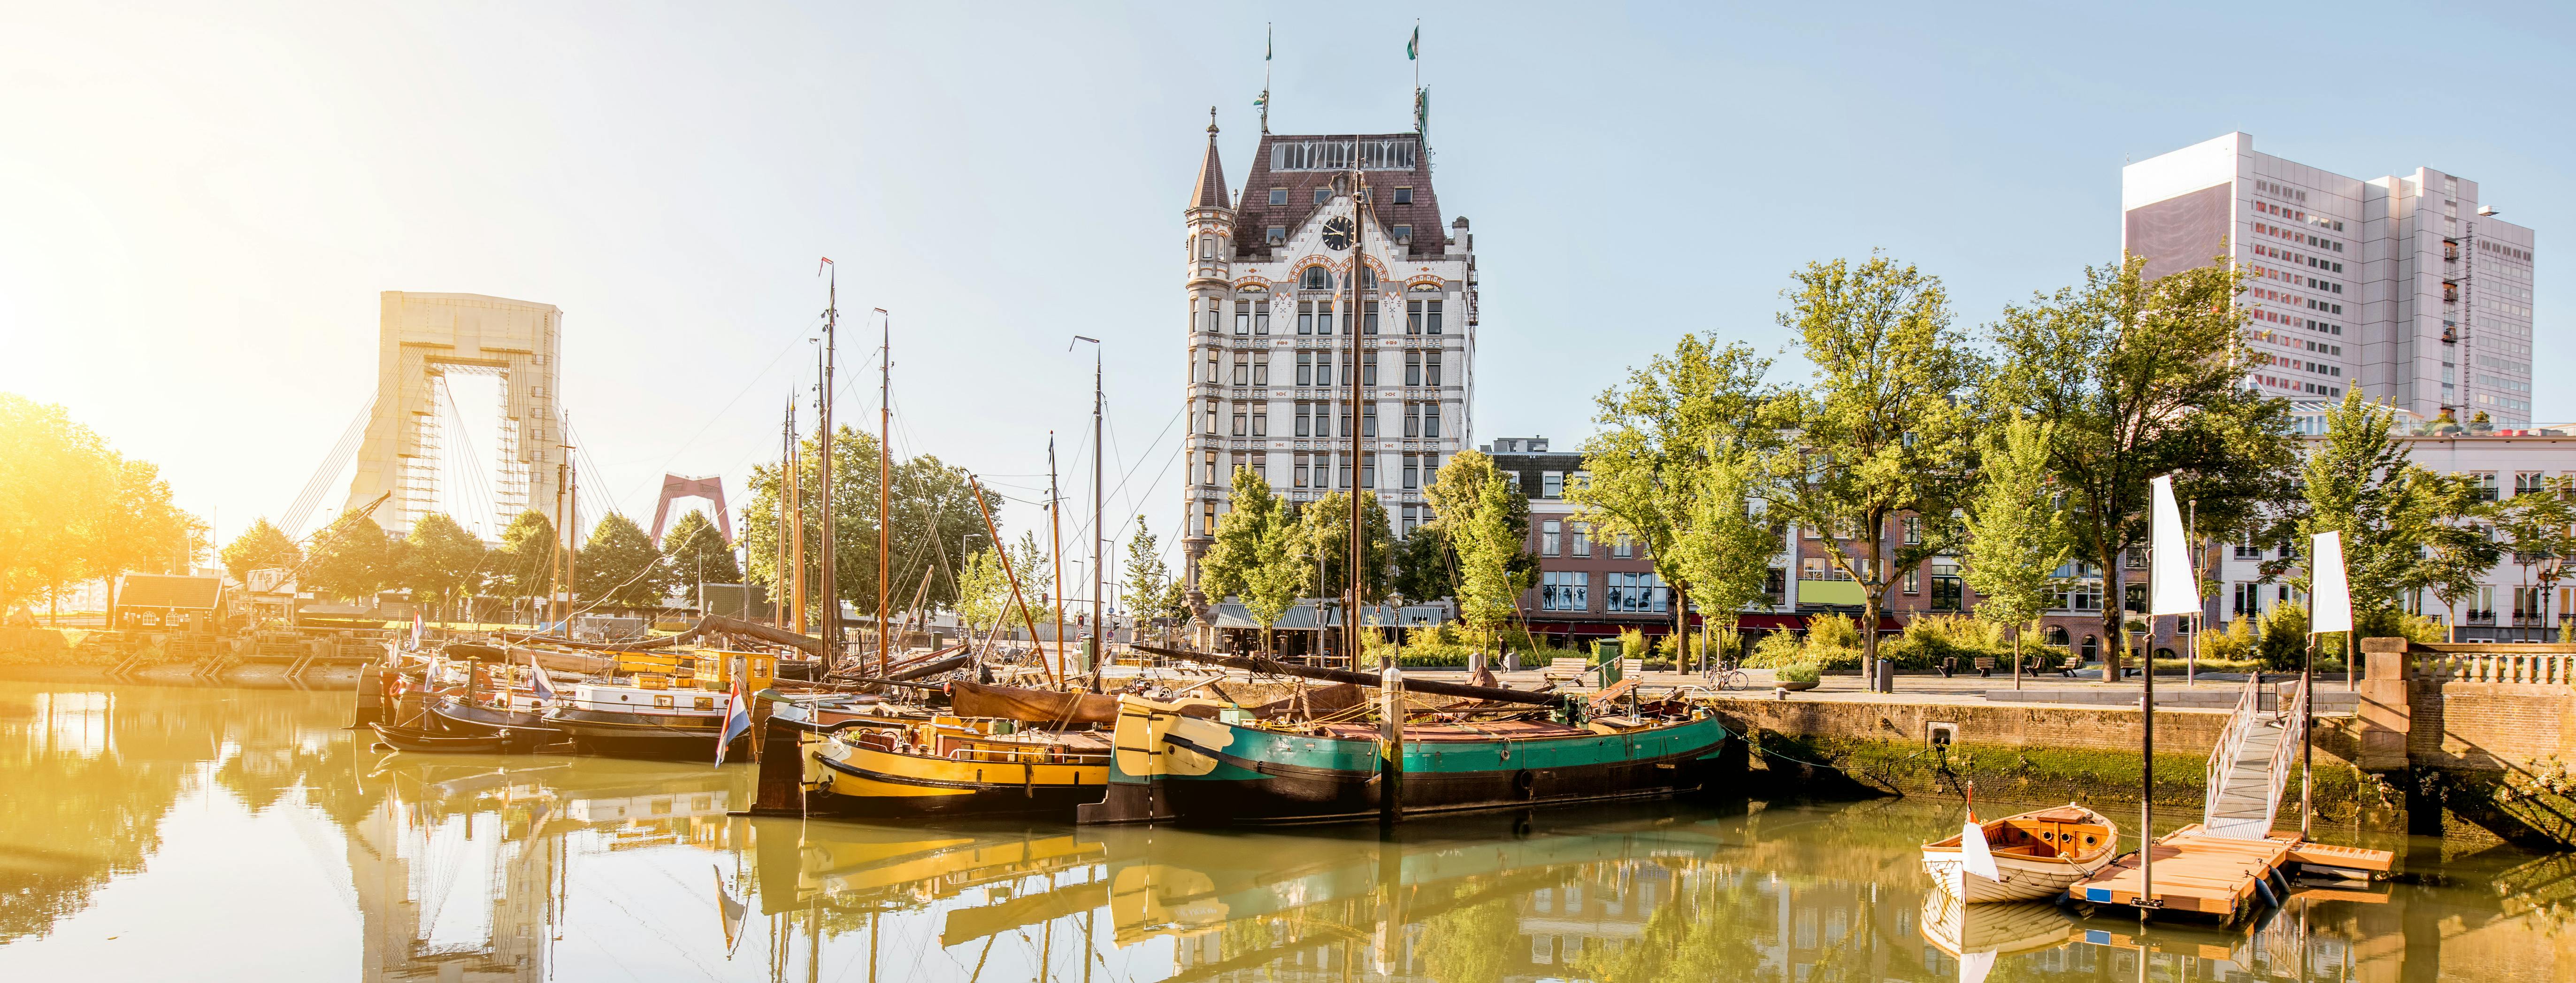 Rotterdam Old Harbor